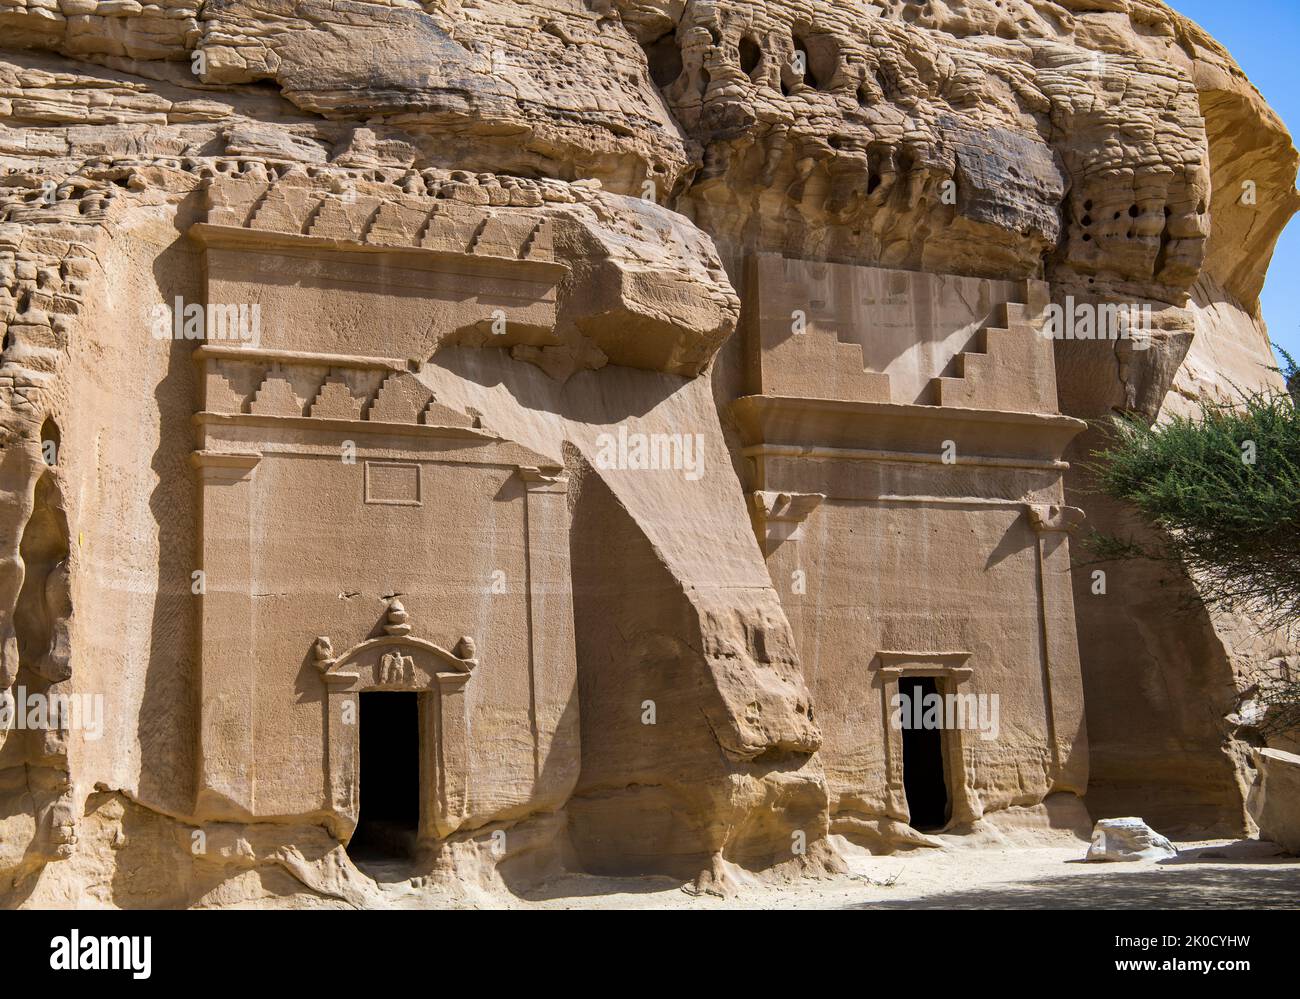 Two side by side skilfully carved tombs Jabal Al Banat Hegra Saudi Arabia Stock Photo